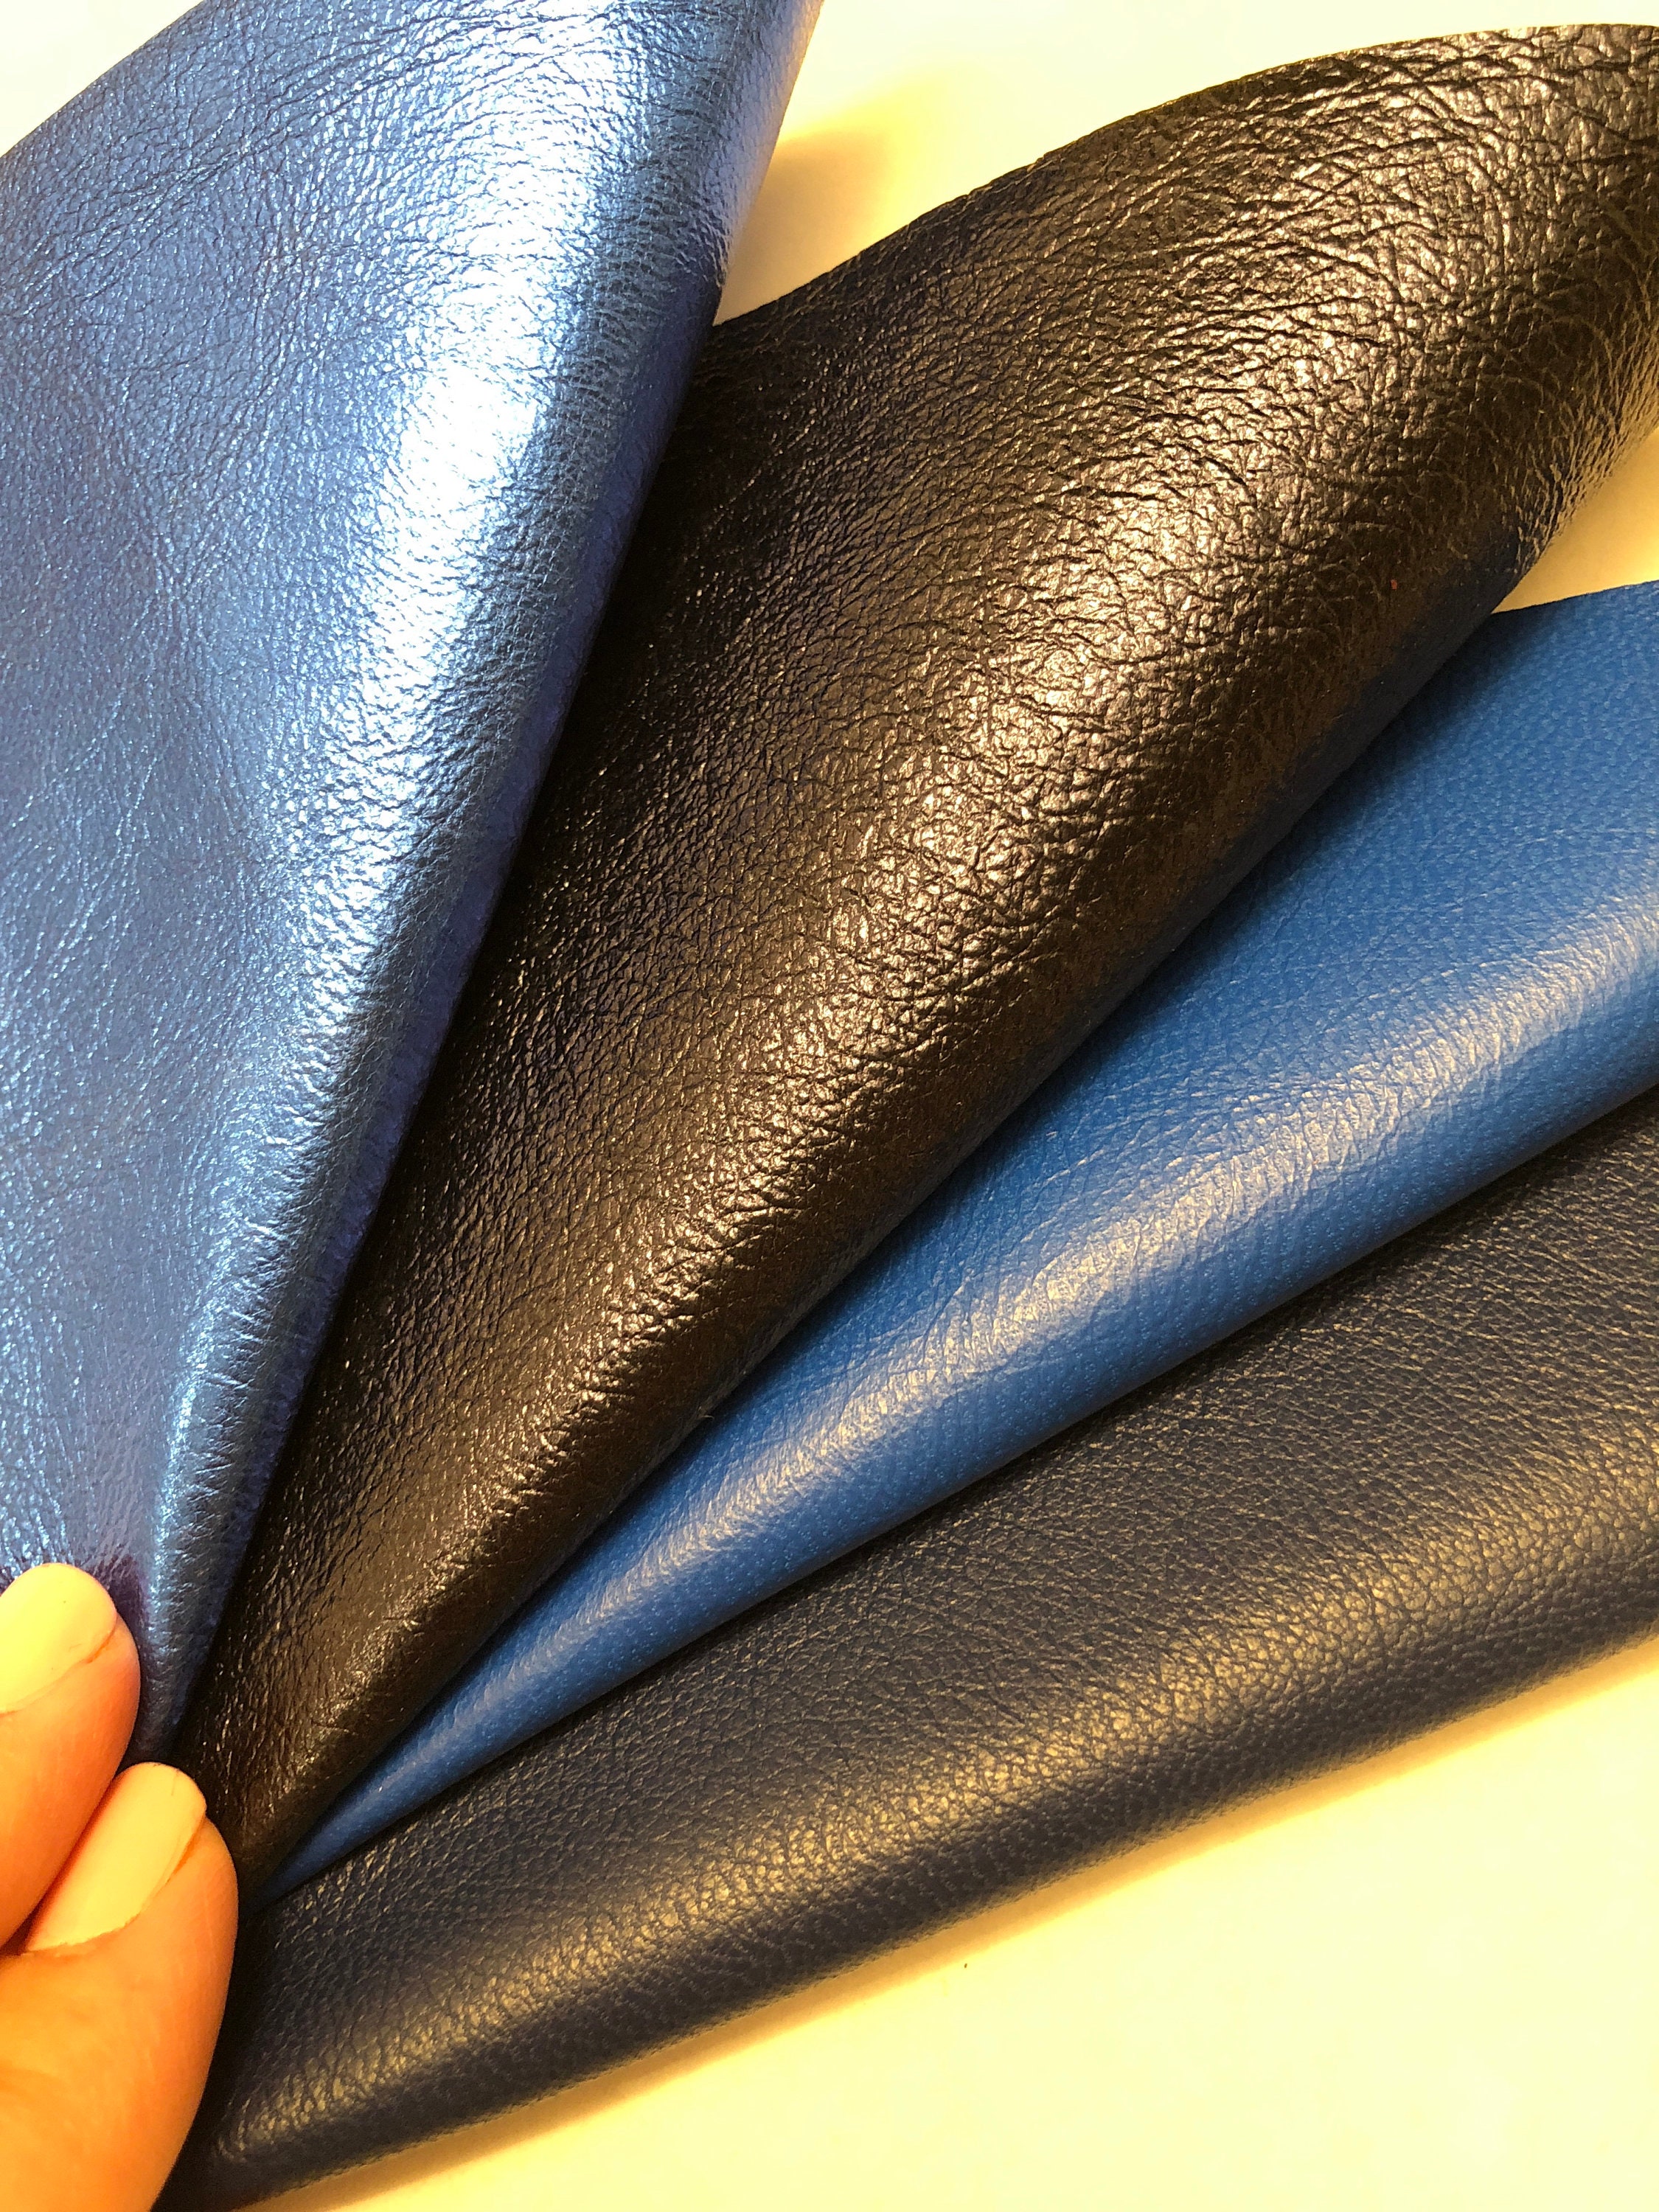 BLUE Metallic Leather Hide // Choose Your Size//genuine Metal Blue